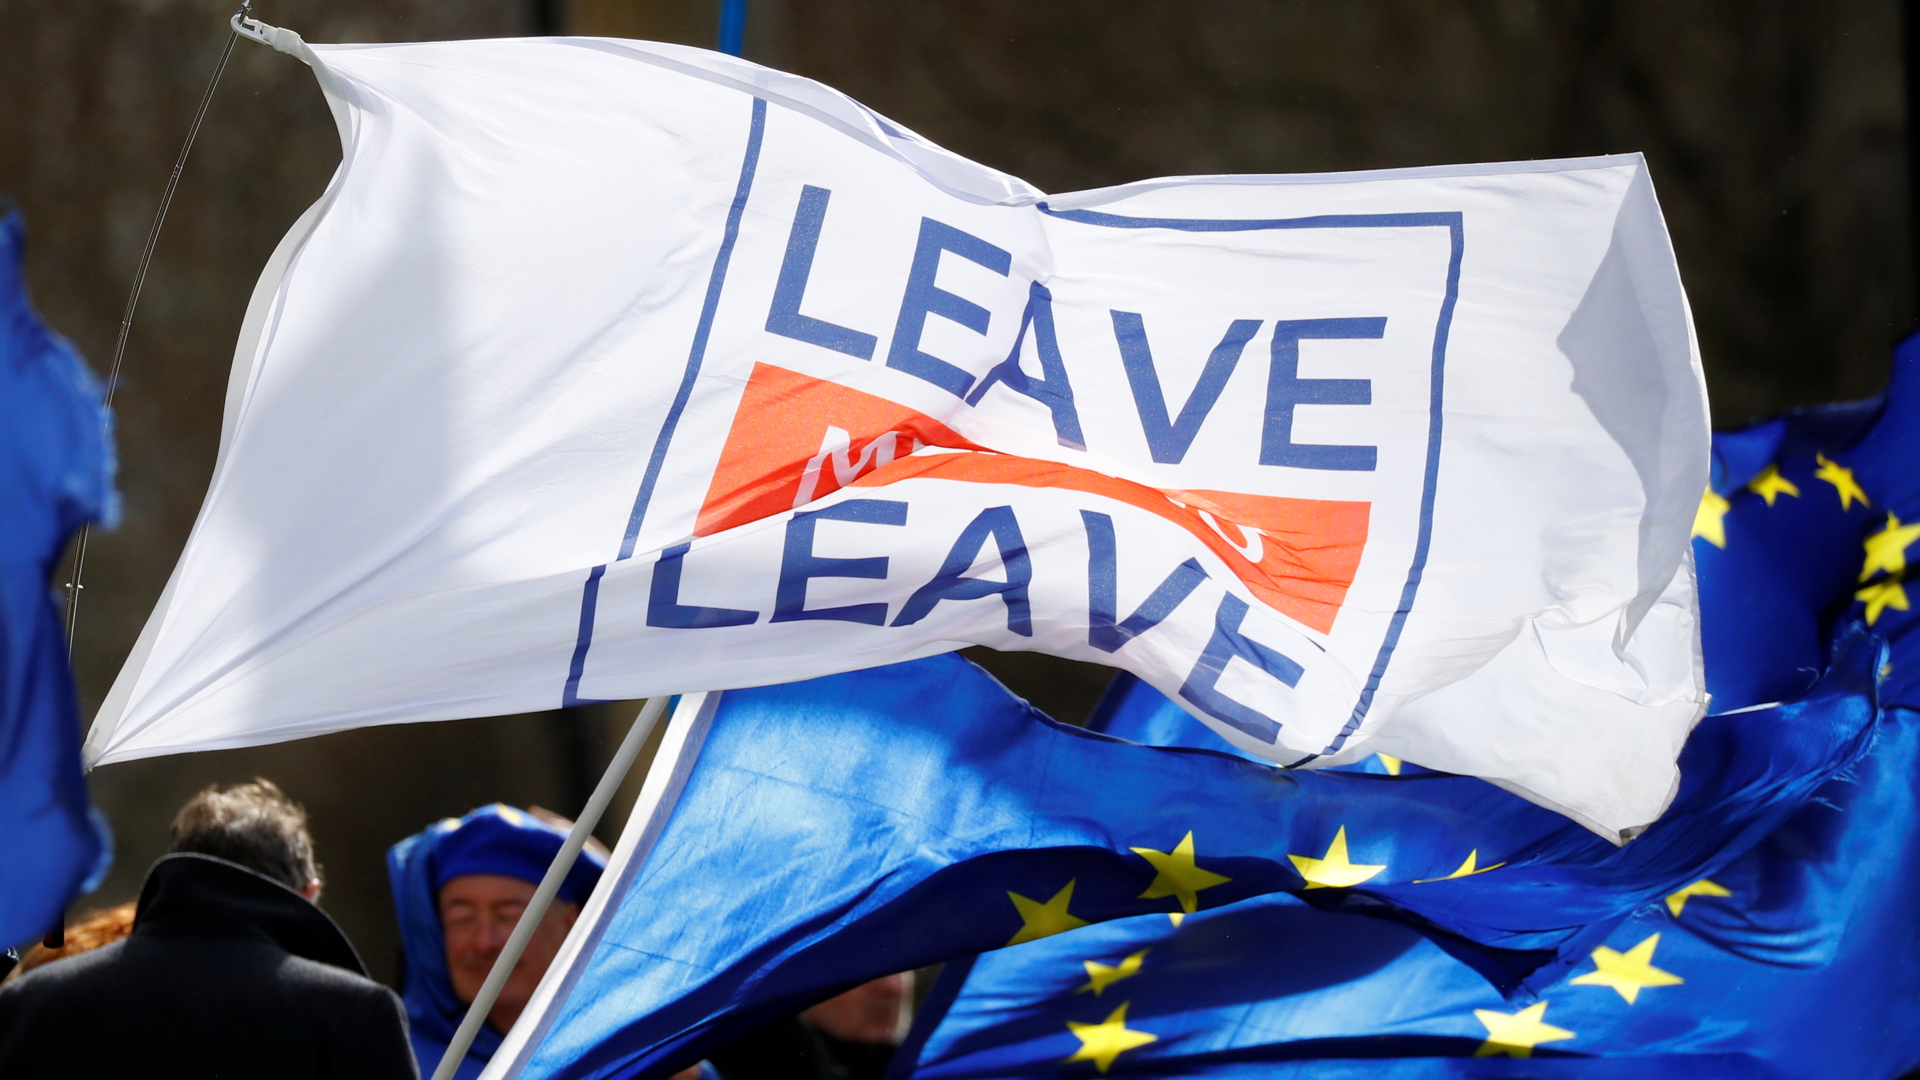 Brexit: EU-Flagge und Banner mit der Aufschrift "Leave Leave" | REUTERS